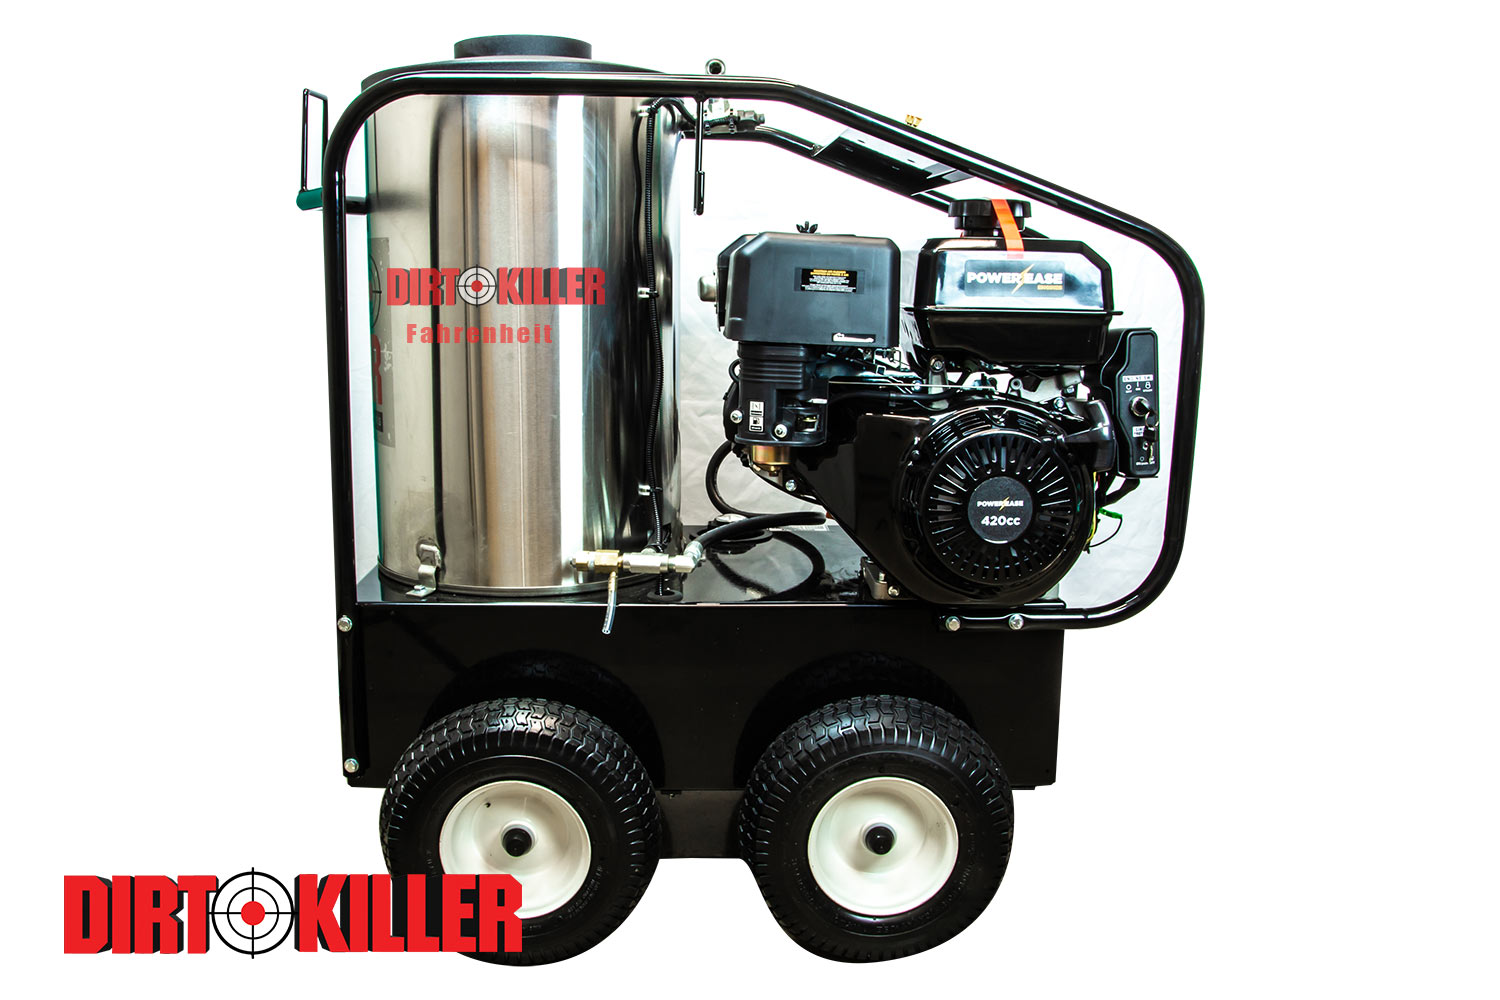 Dirt Killer Fahrenheit 15 hot water pressure washer 2700 PSI 5.3 GPM-image_1.3 GPM-image_1